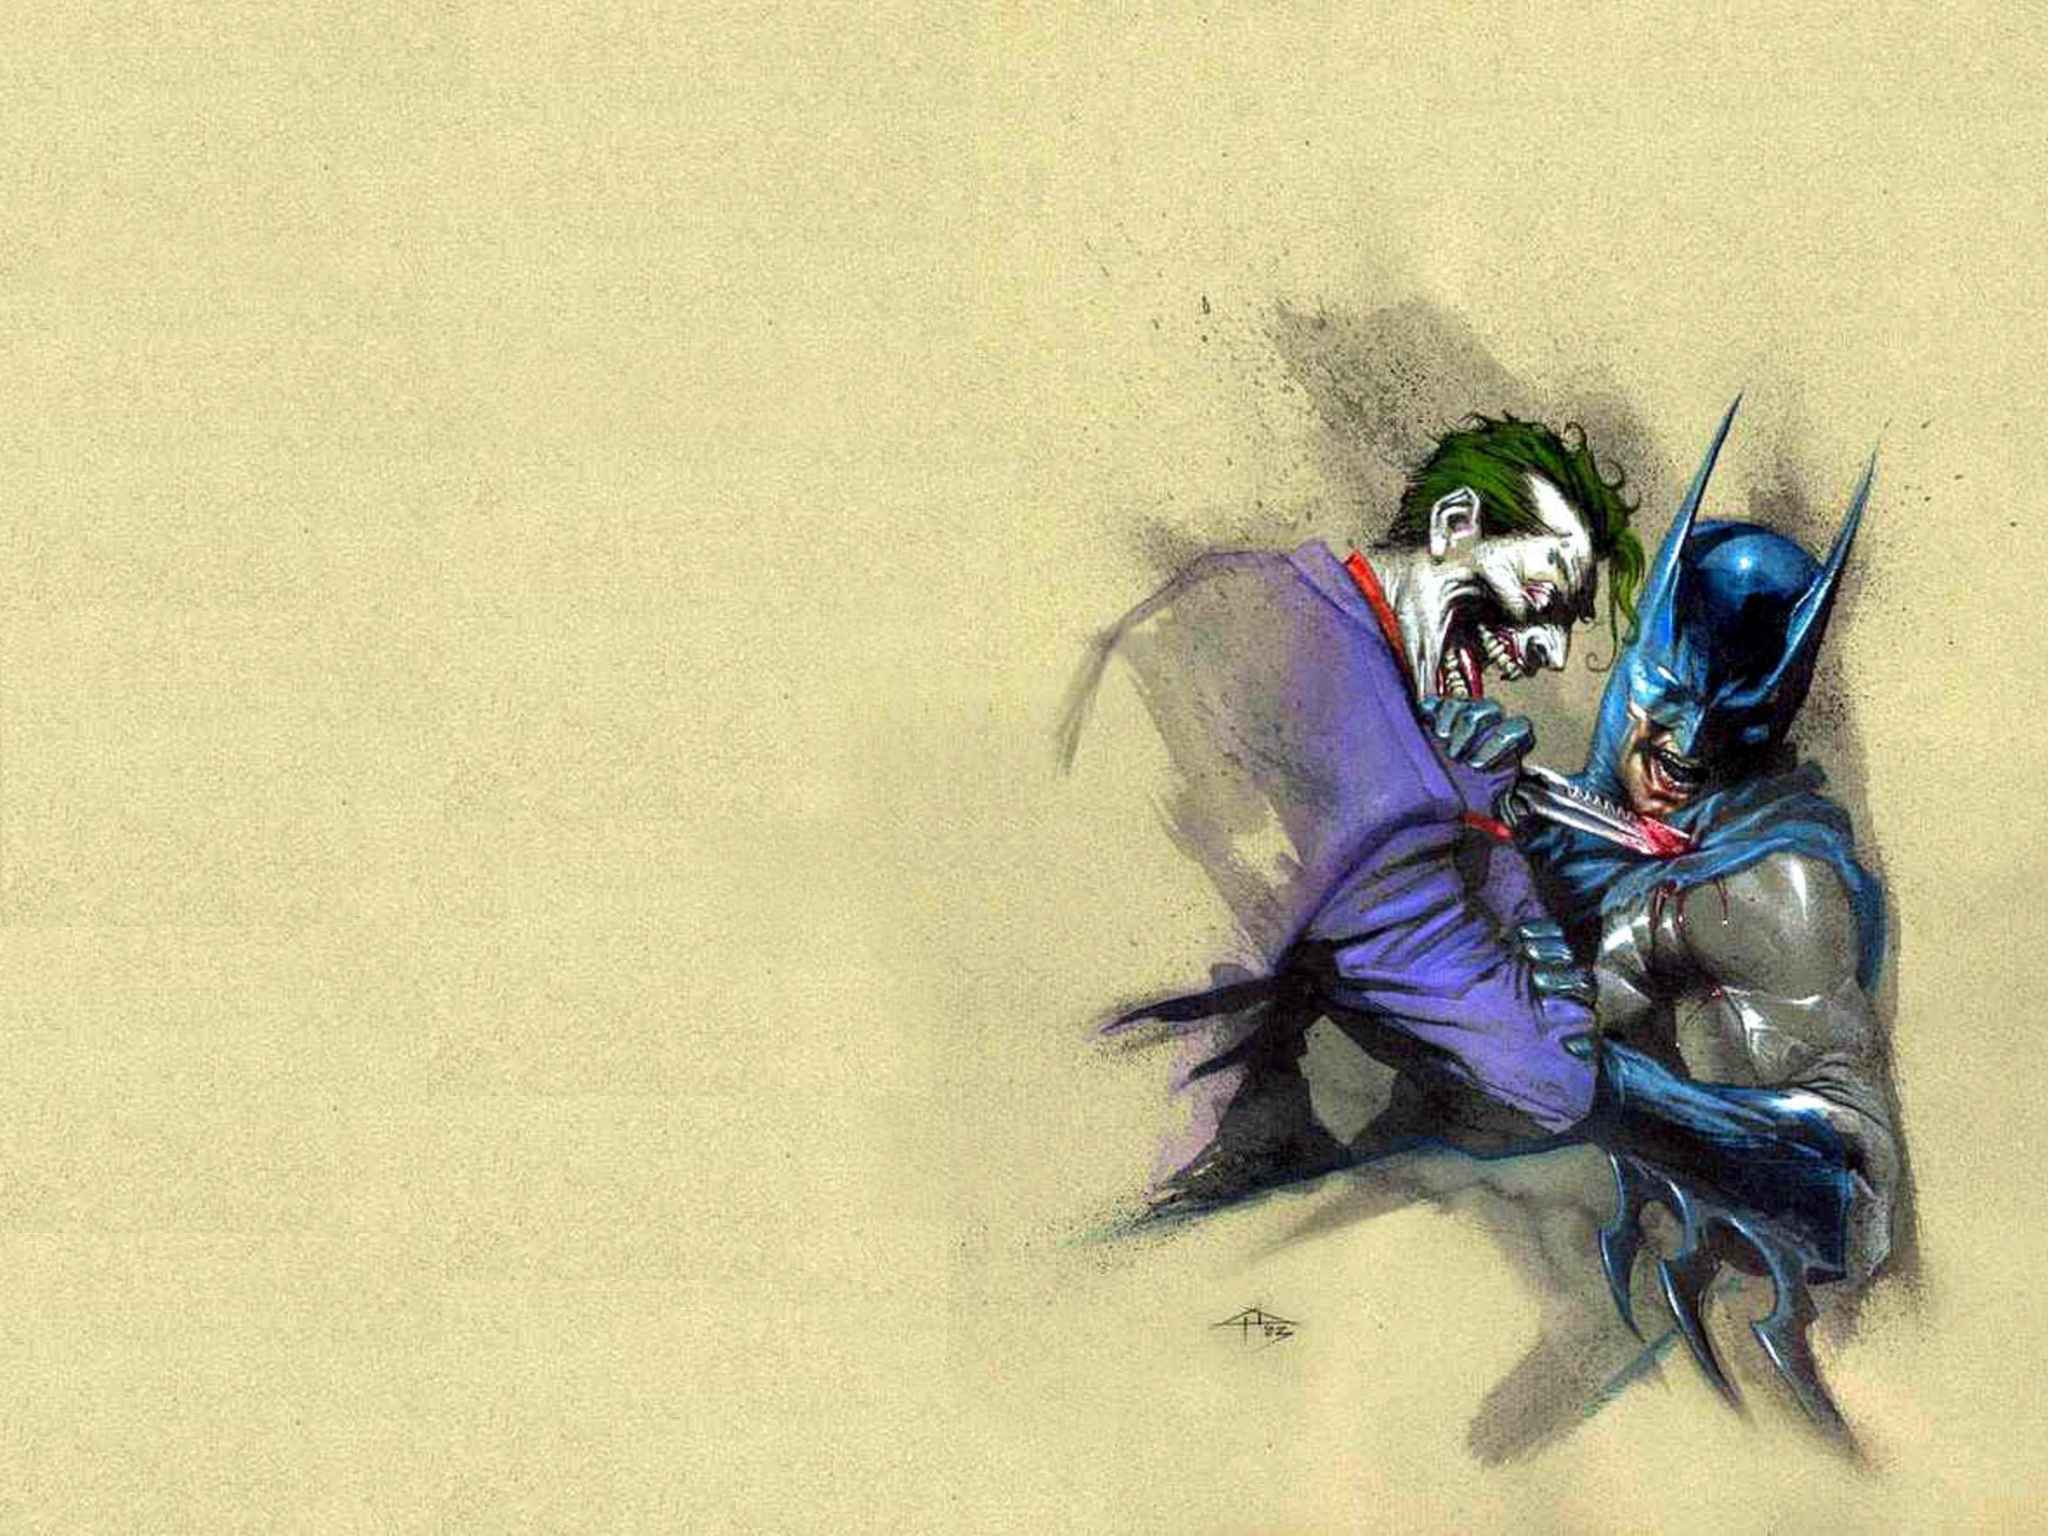 Скачать обои бесплатно Джокер, Комиксы, Бэтмен картинка на рабочий стол ПК